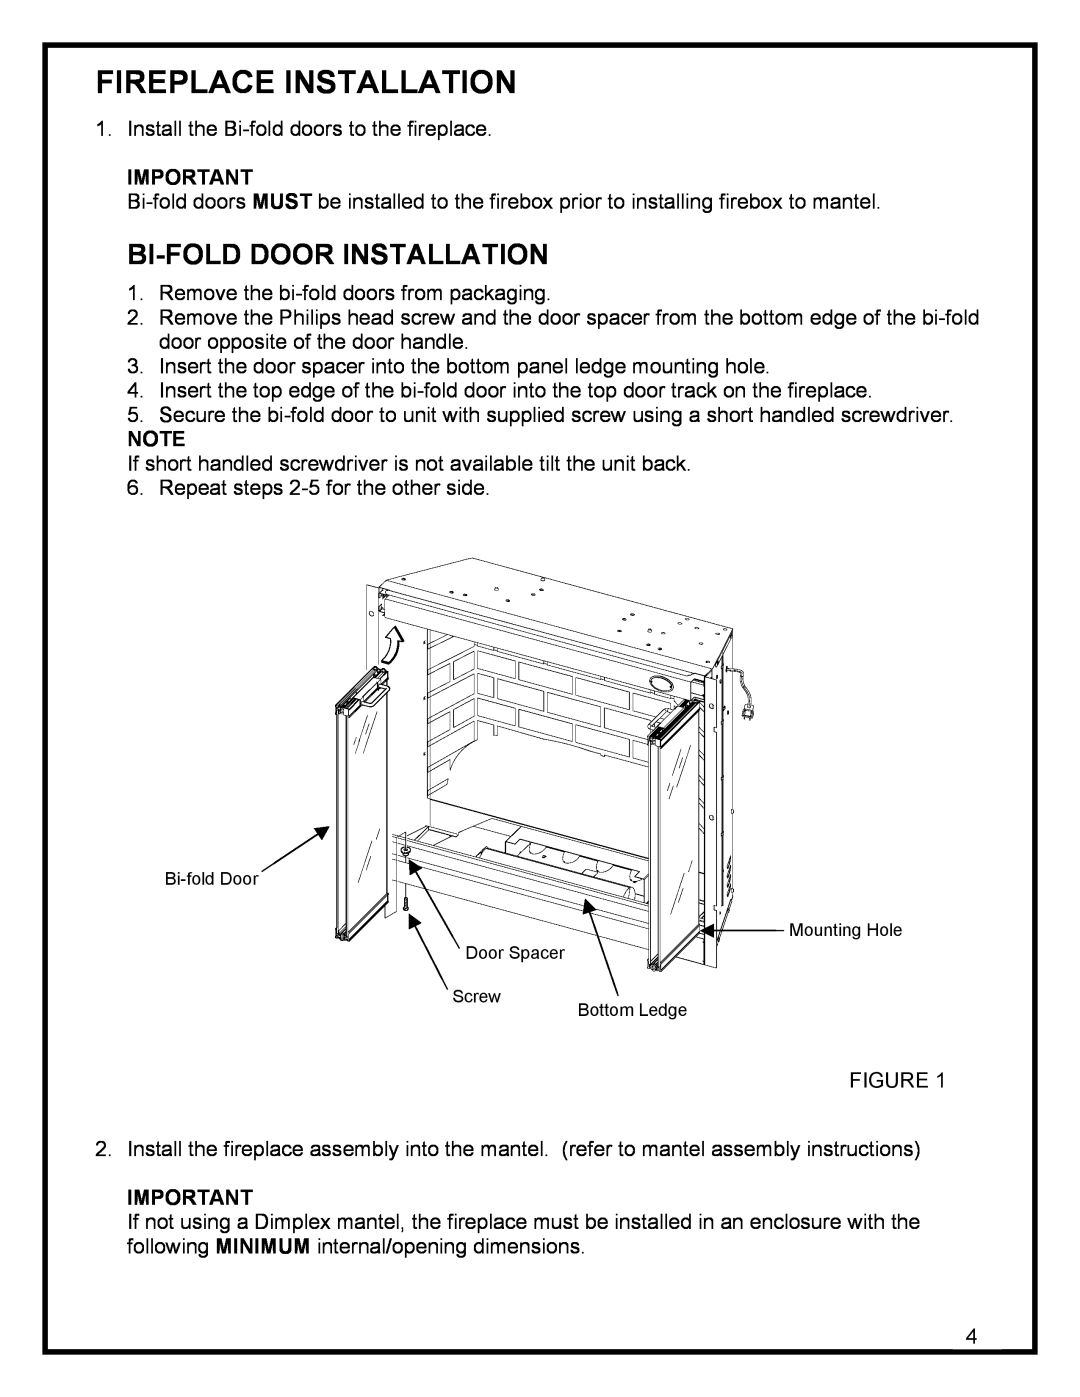 Dimplex DF3215 manual Fireplace Installation, Bi-Folddoor Installation 